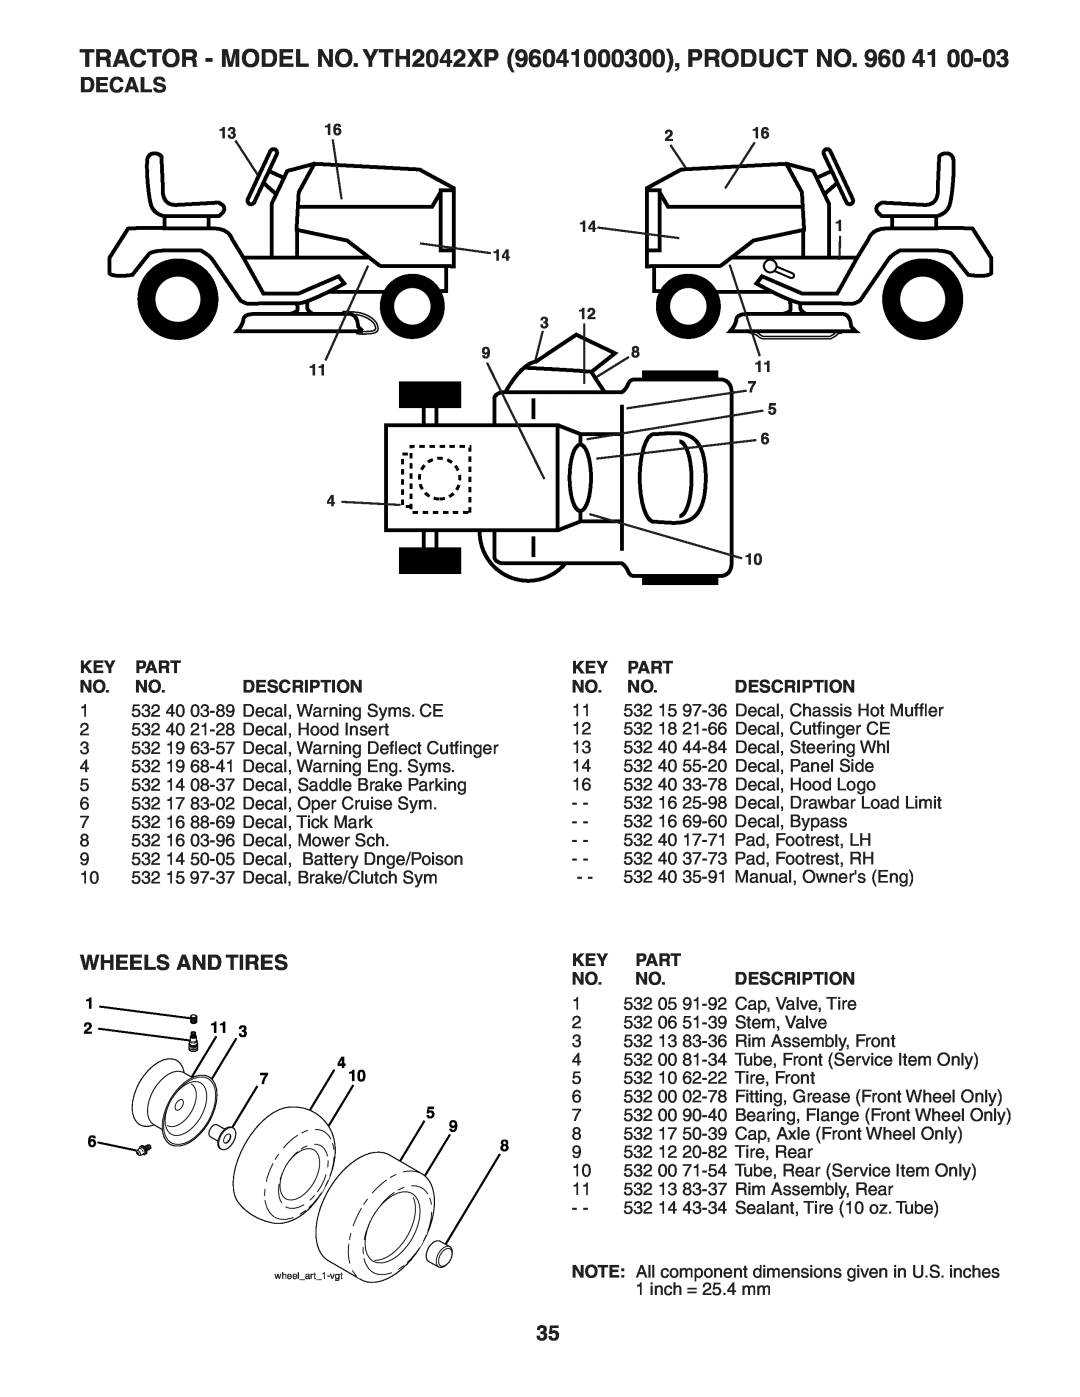 Husqvarna YTH2042XP owner manual Decals, Wheels And Tires, Part, Description 